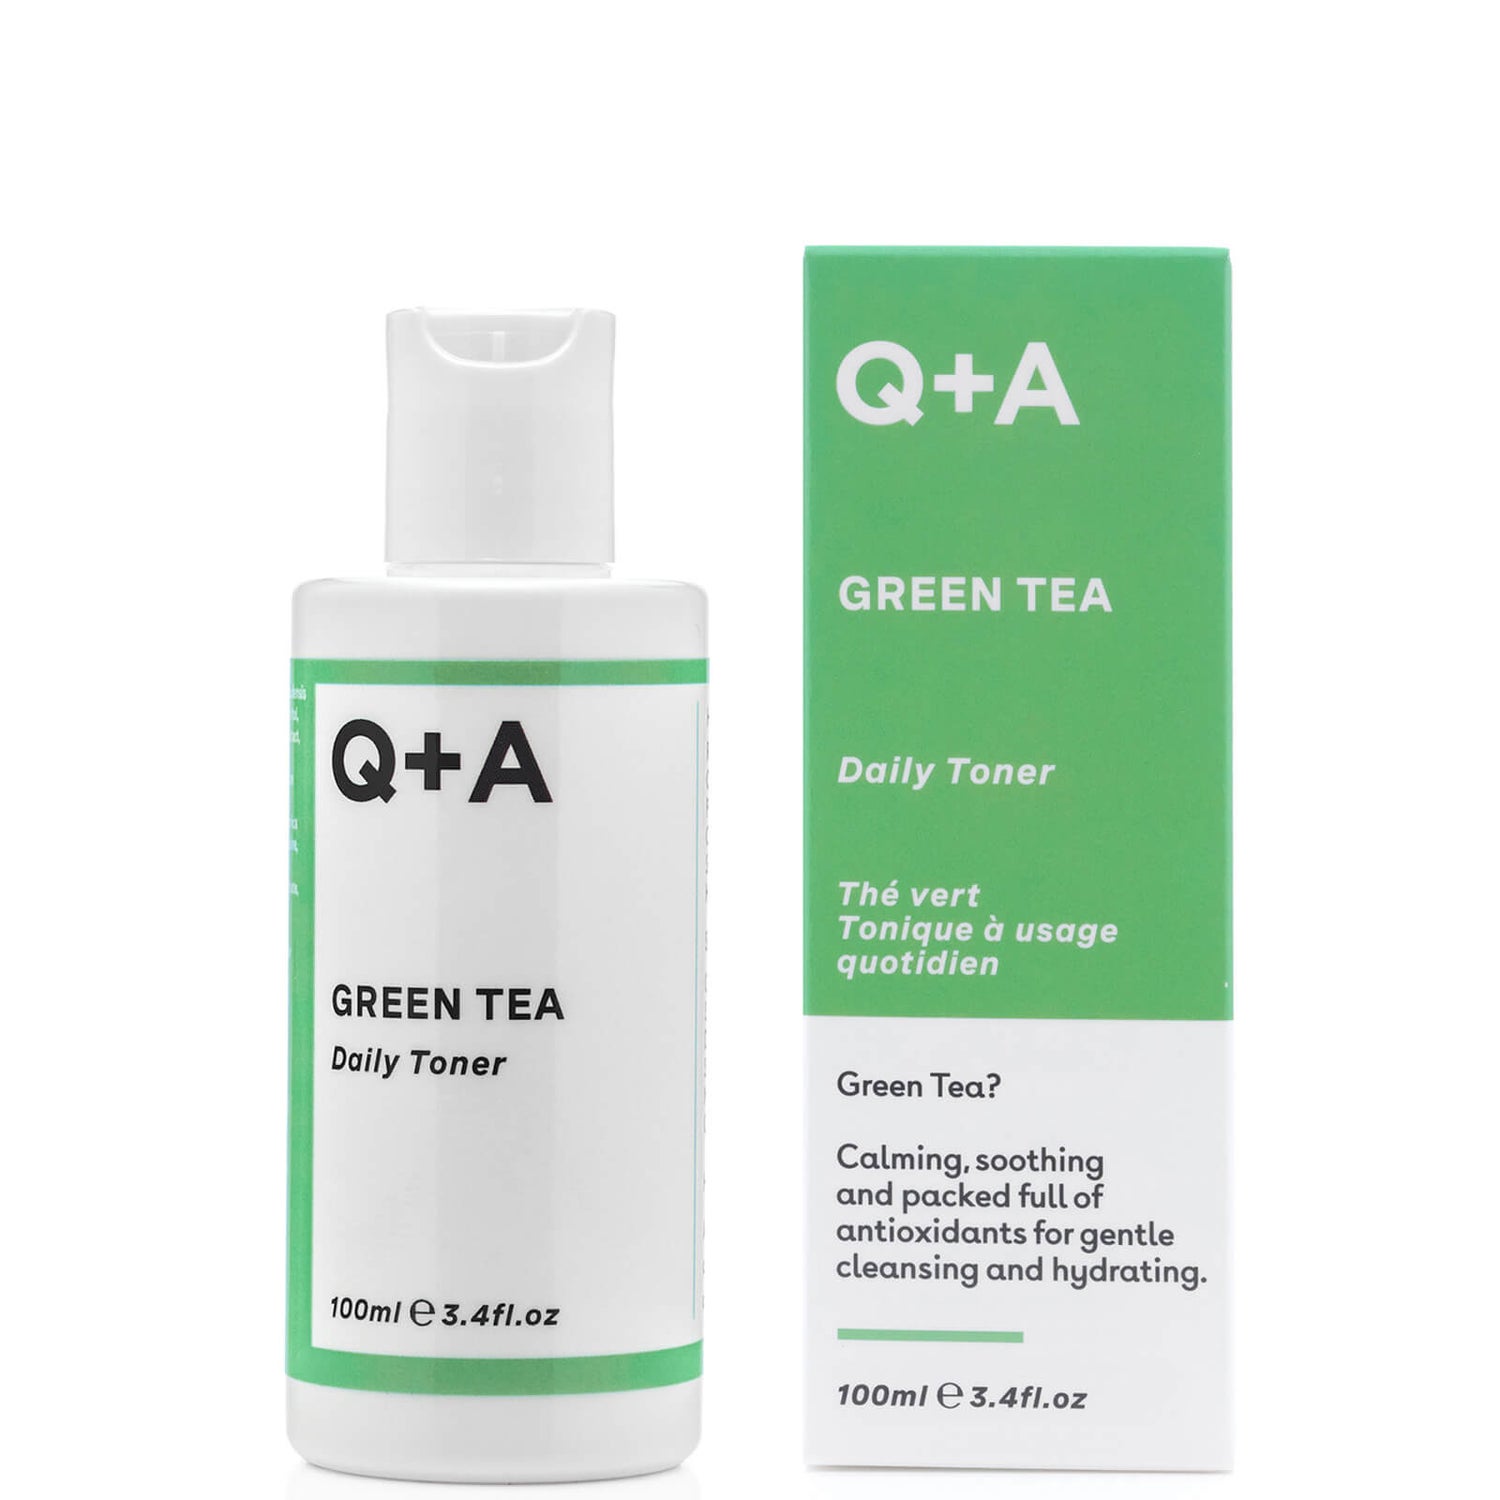 Q+A Green Tea Daily Toner 100ml